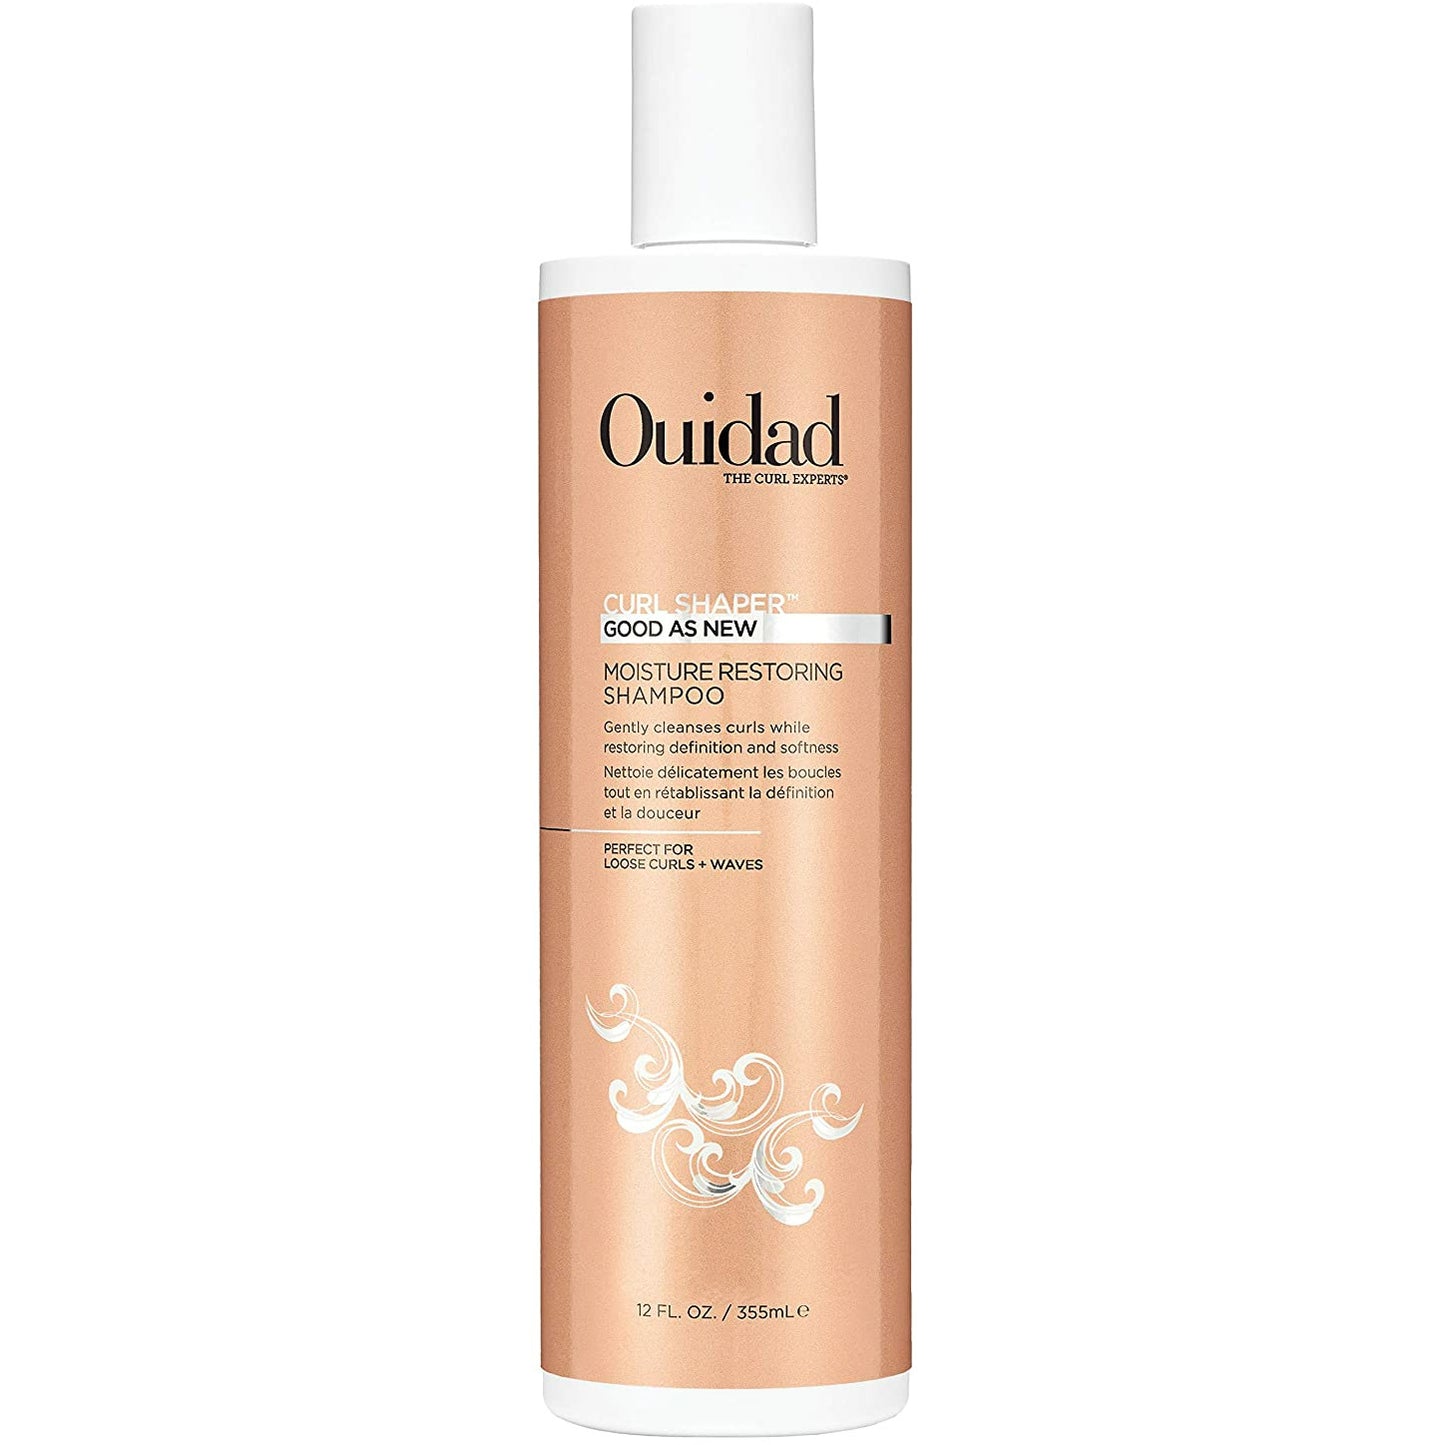 Ouidad Curl Shaper Good as New Moisture Restoring Shampoo, 12 oz